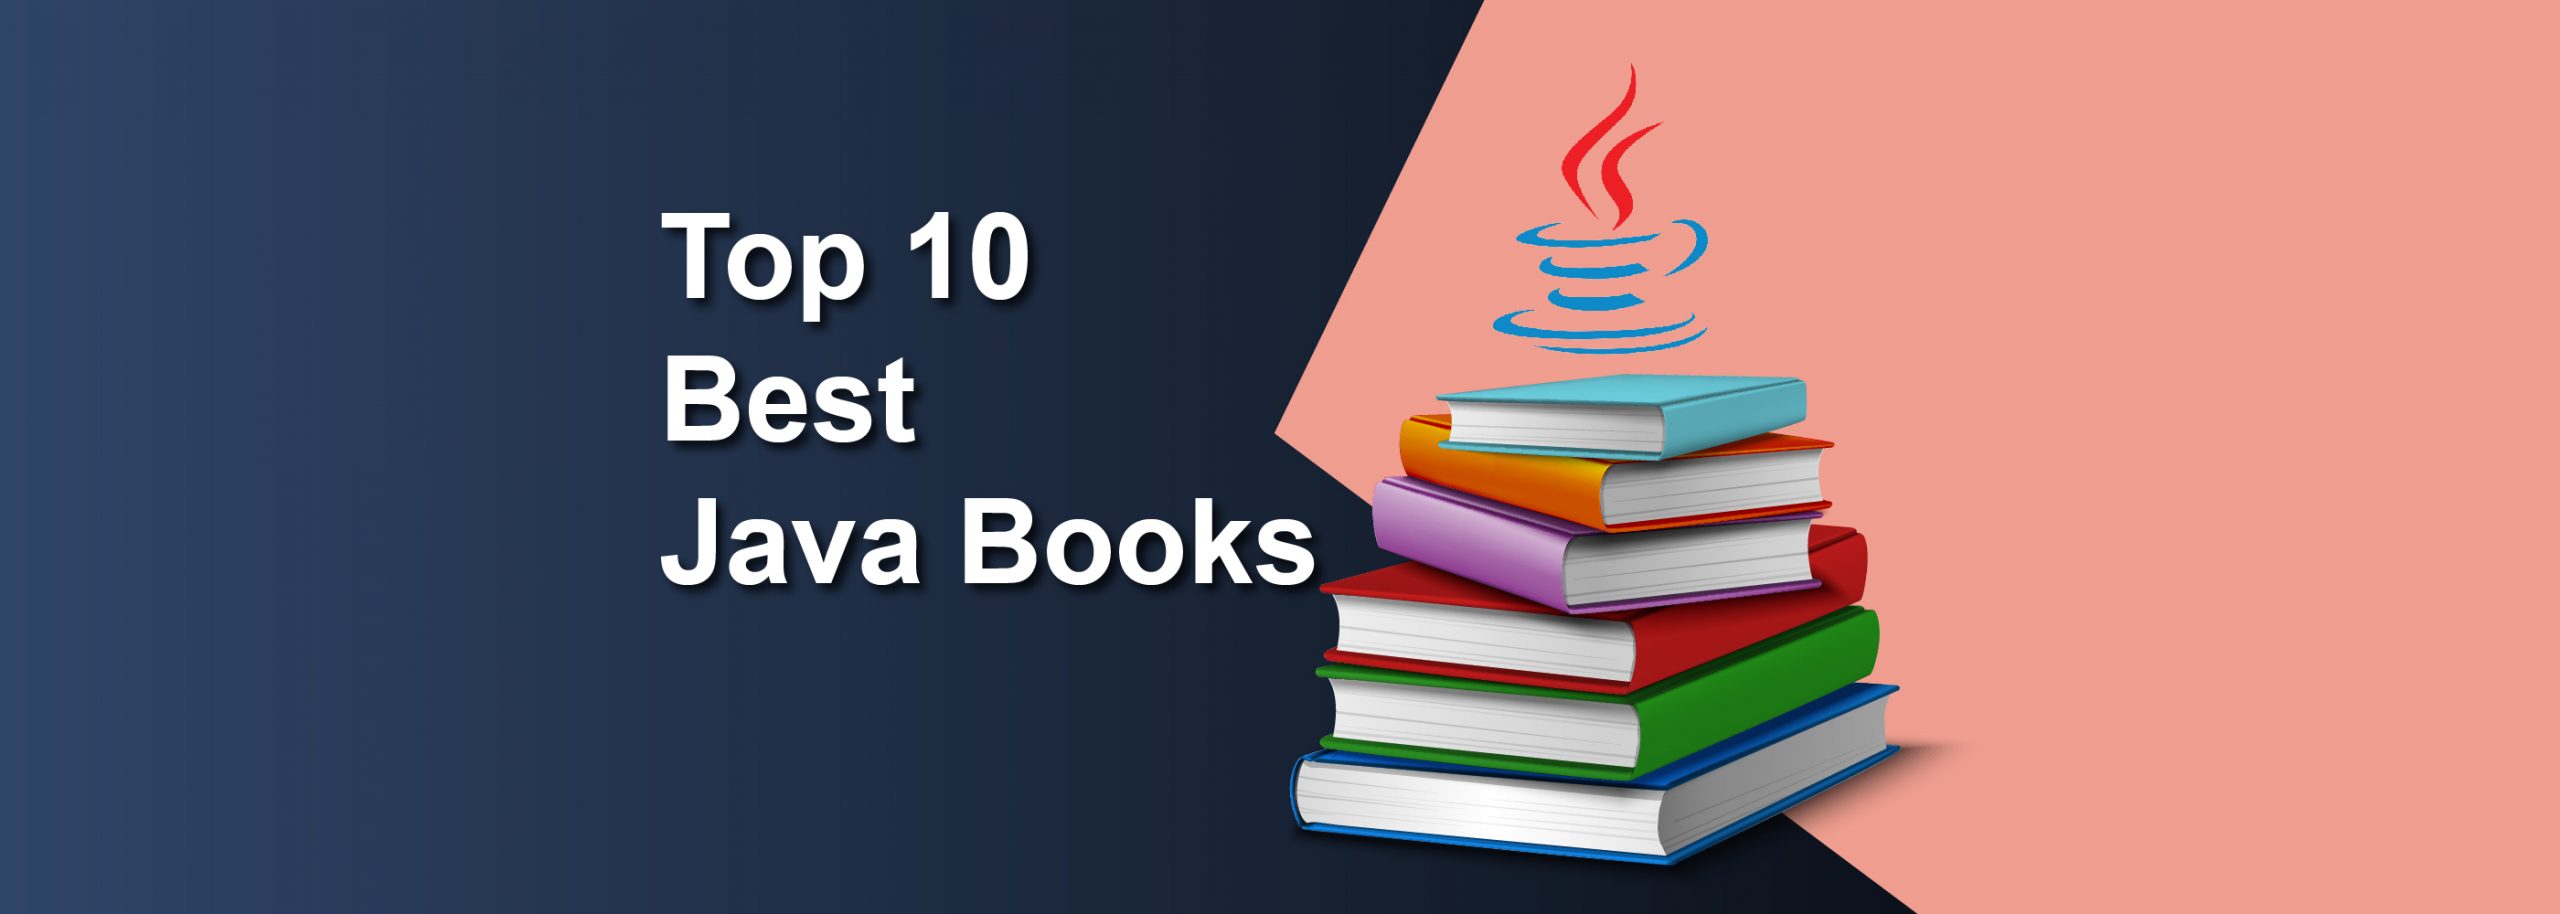 Top 10 Best Java Books DataTrained Data Trained Blogs